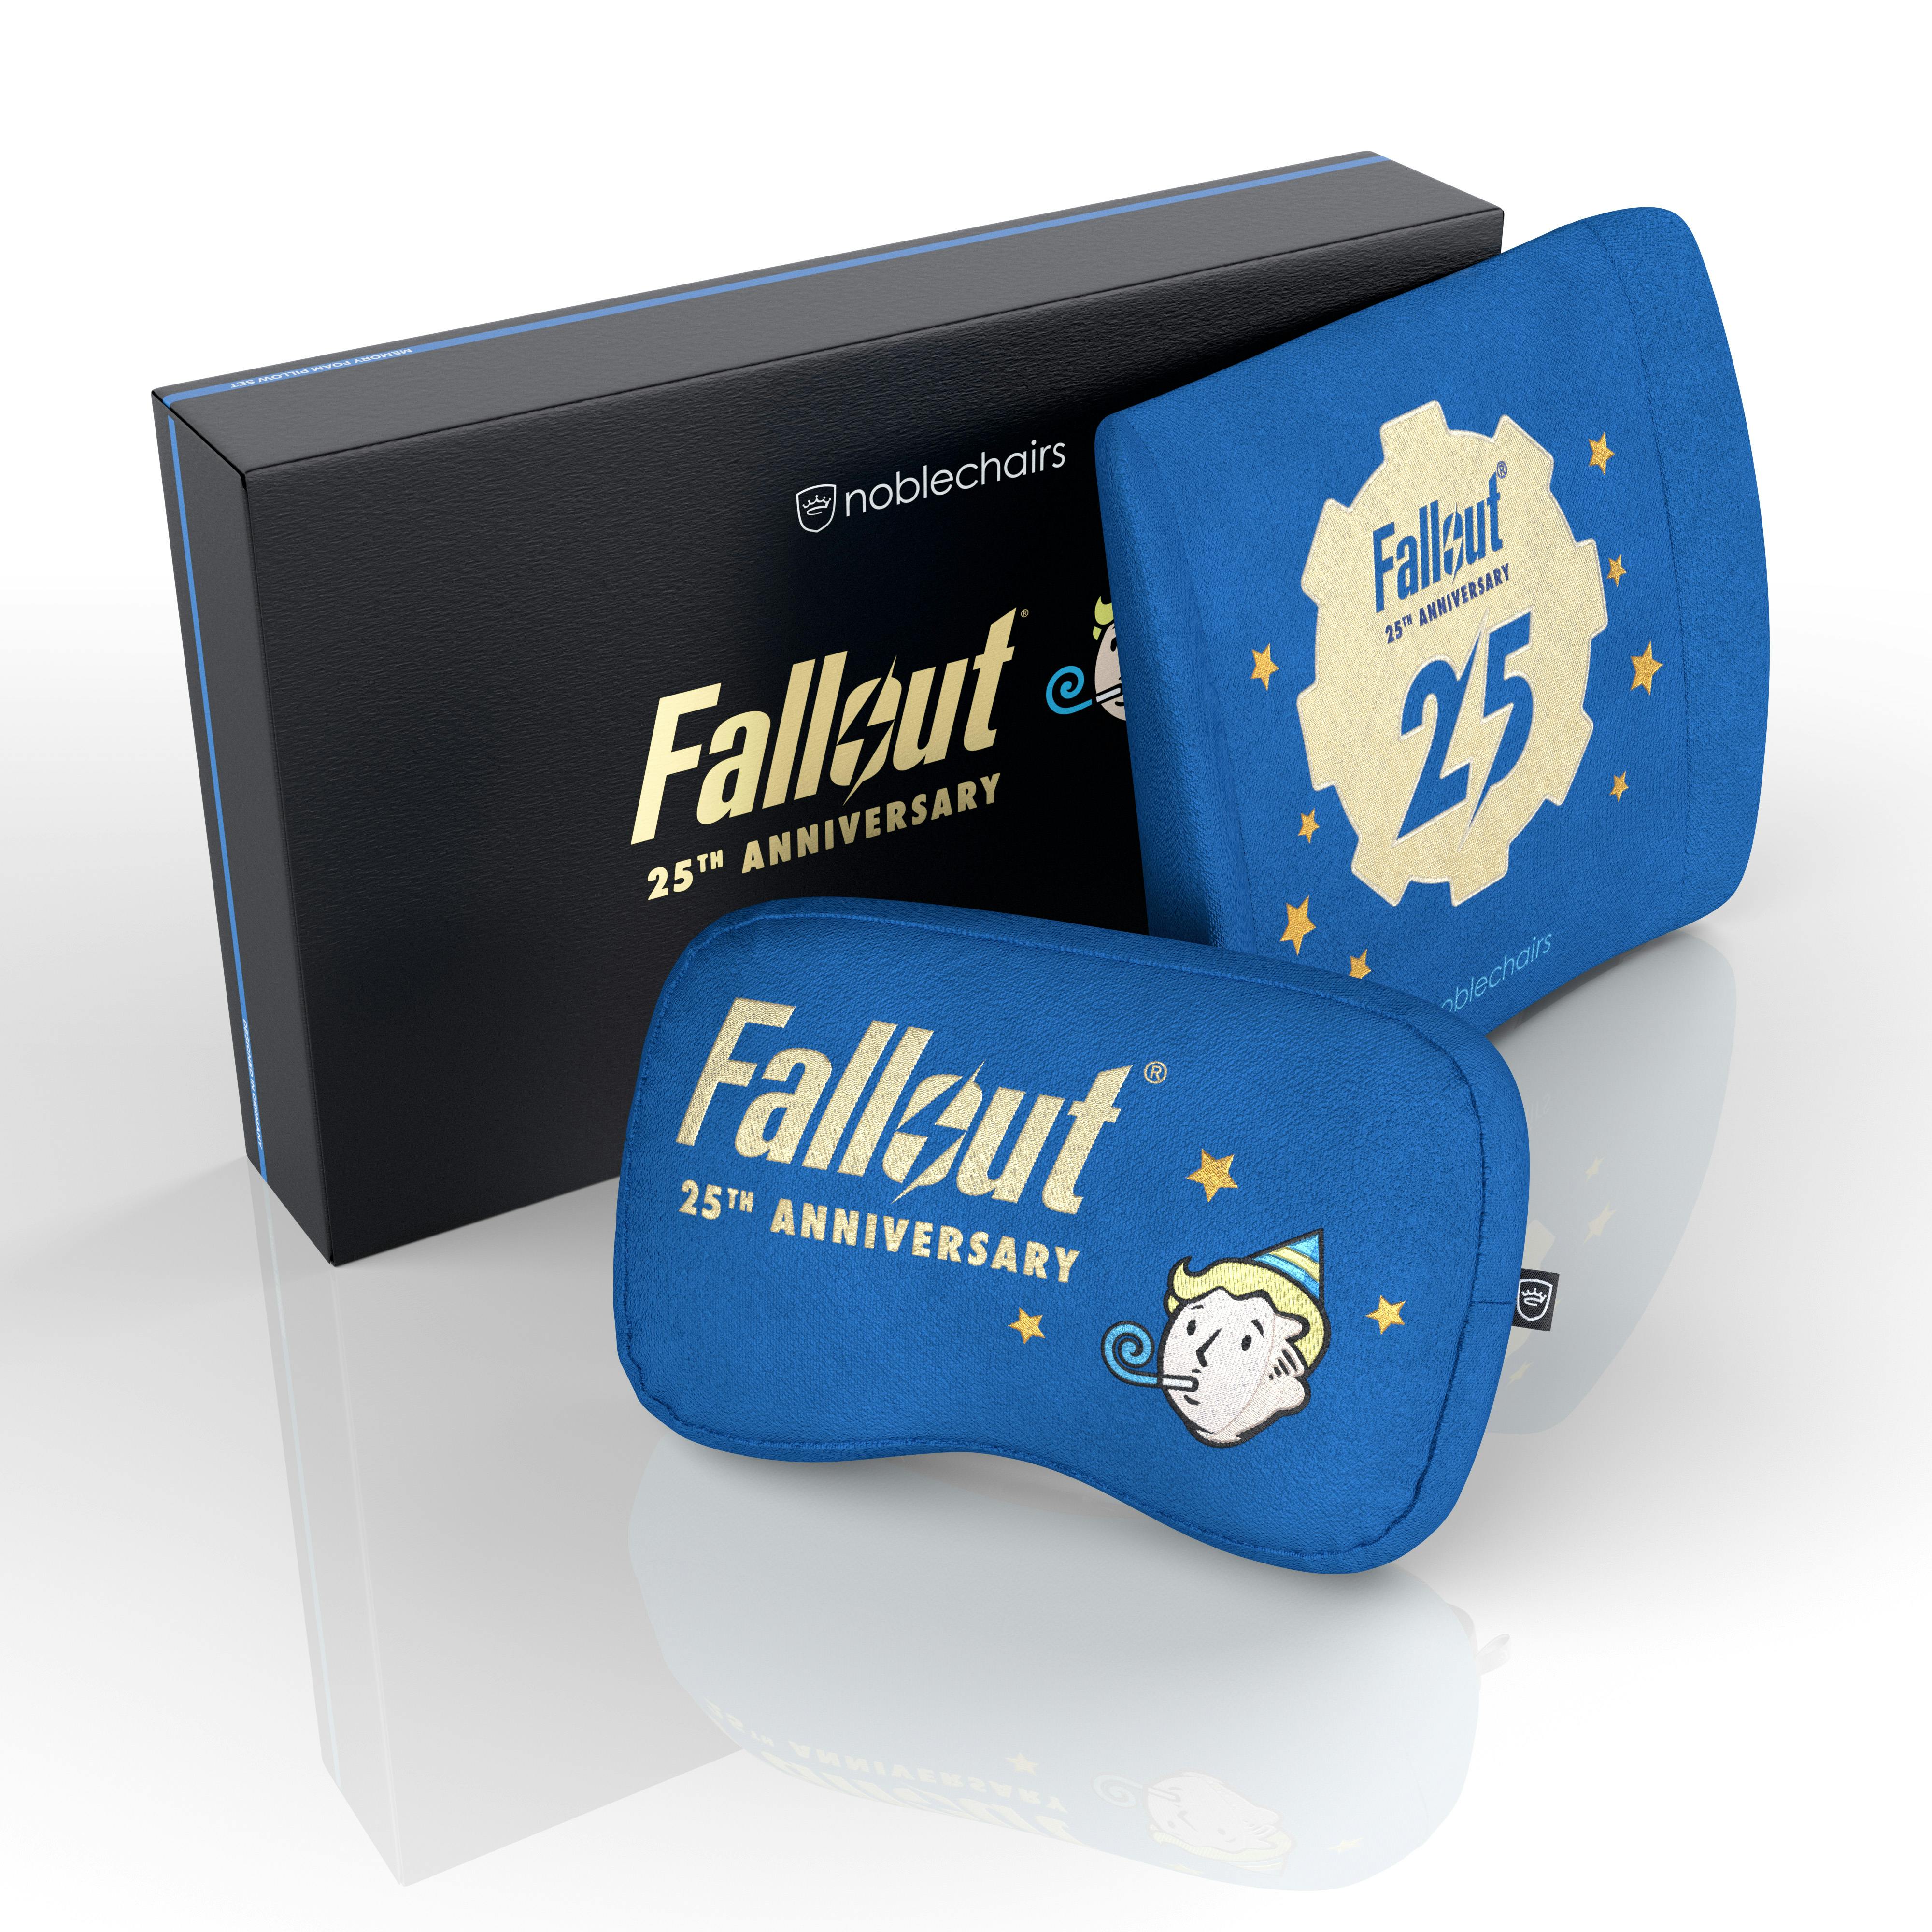  - Memory Foam Fallout 25th Anniversary Edition Pillow Set